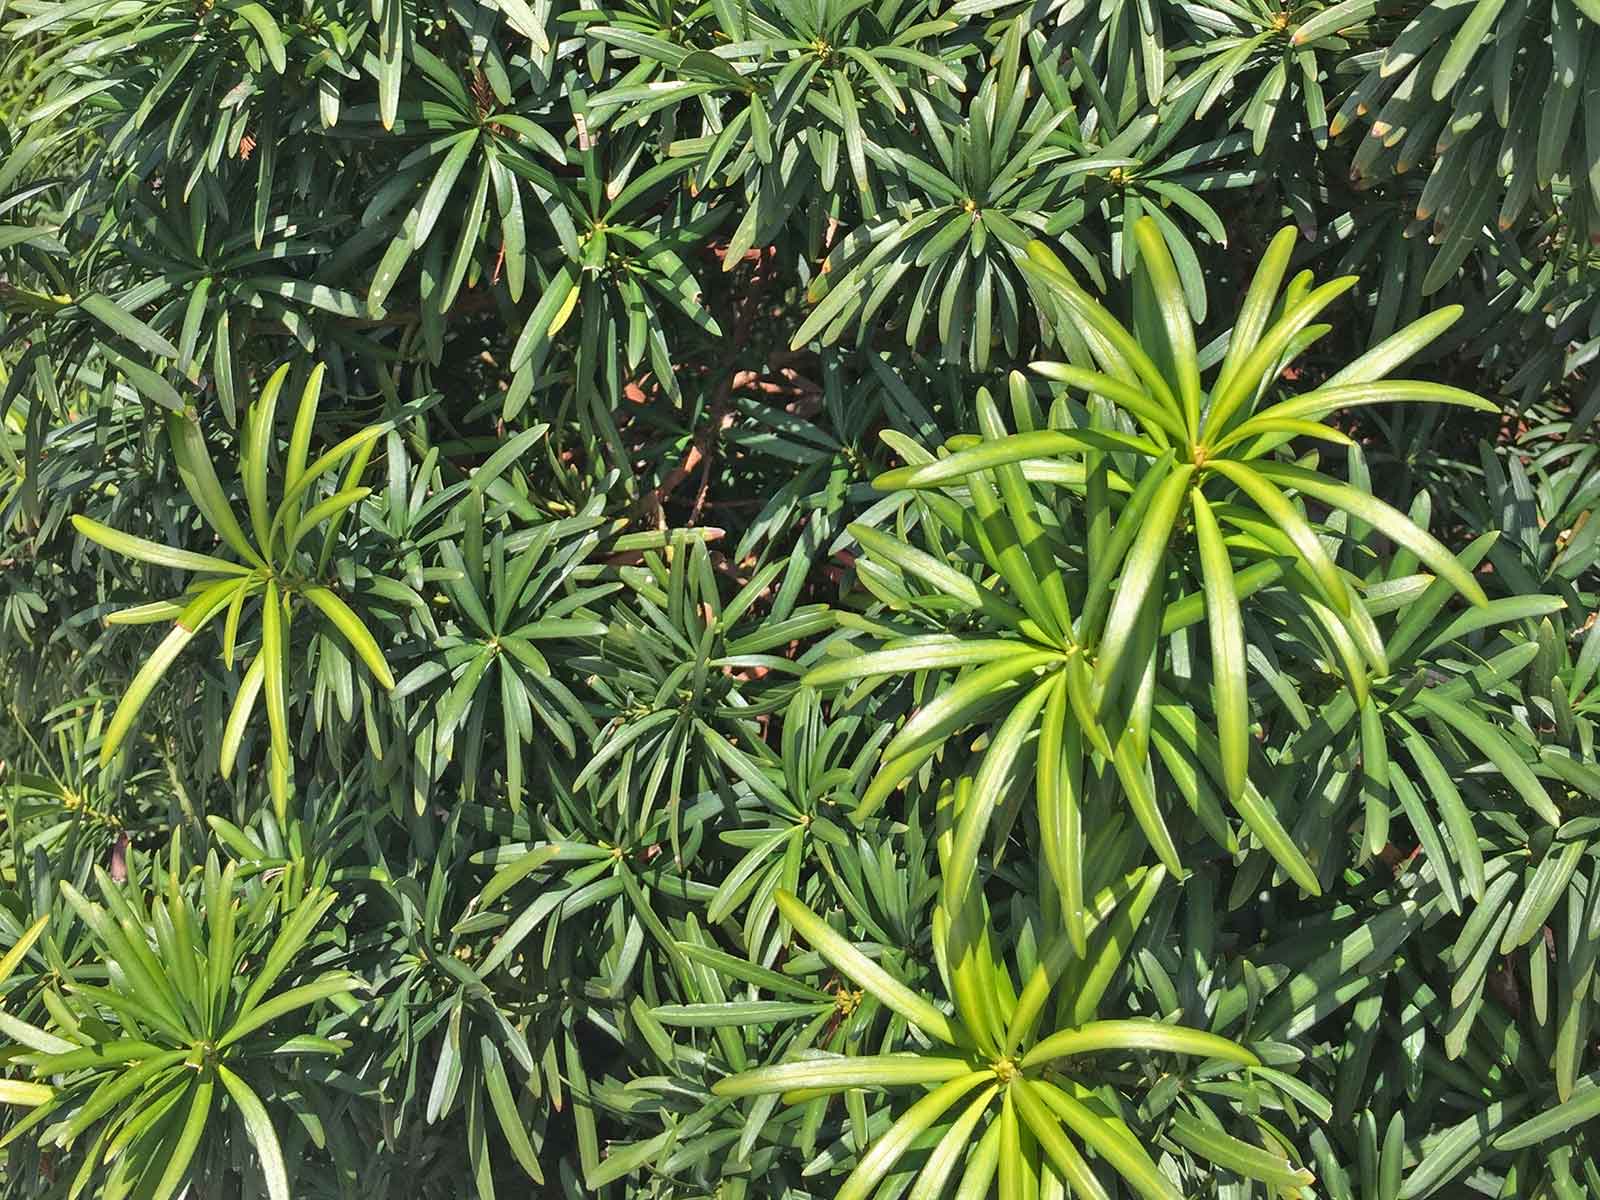 podocarpus